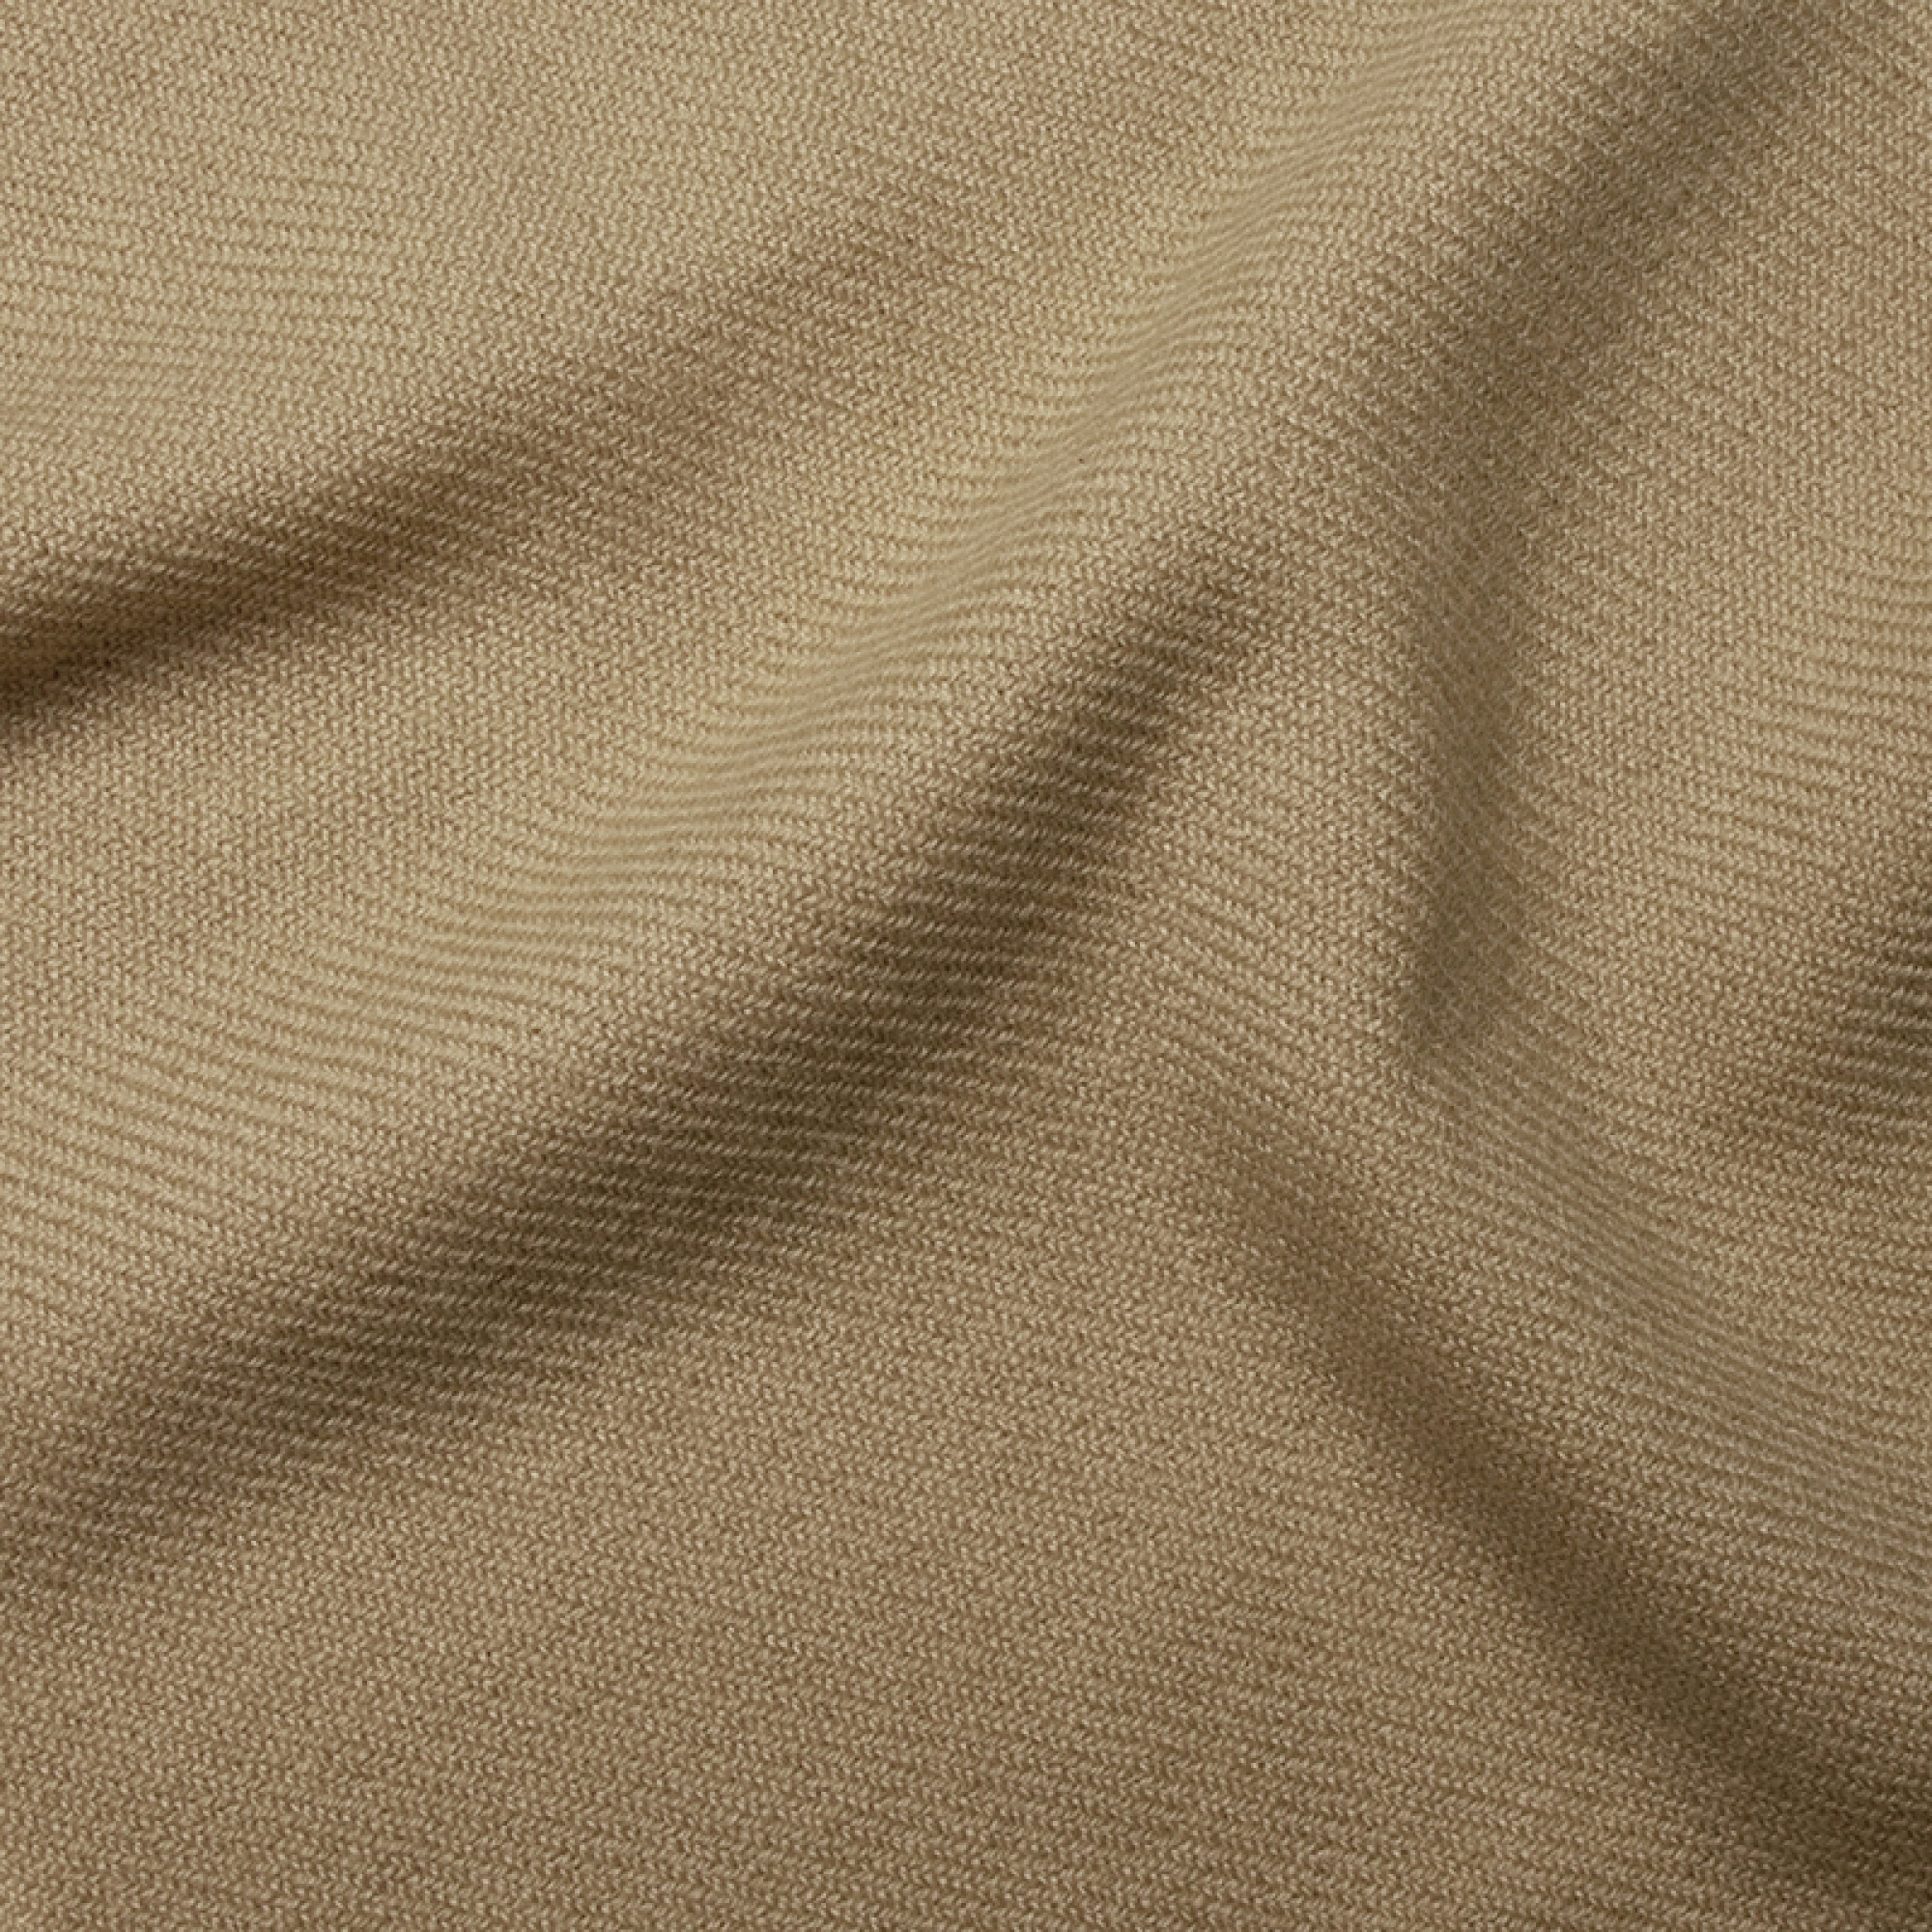 Cashmere accessoires neu toodoo plain xl 240 x 260 beige 240 x 260 cm